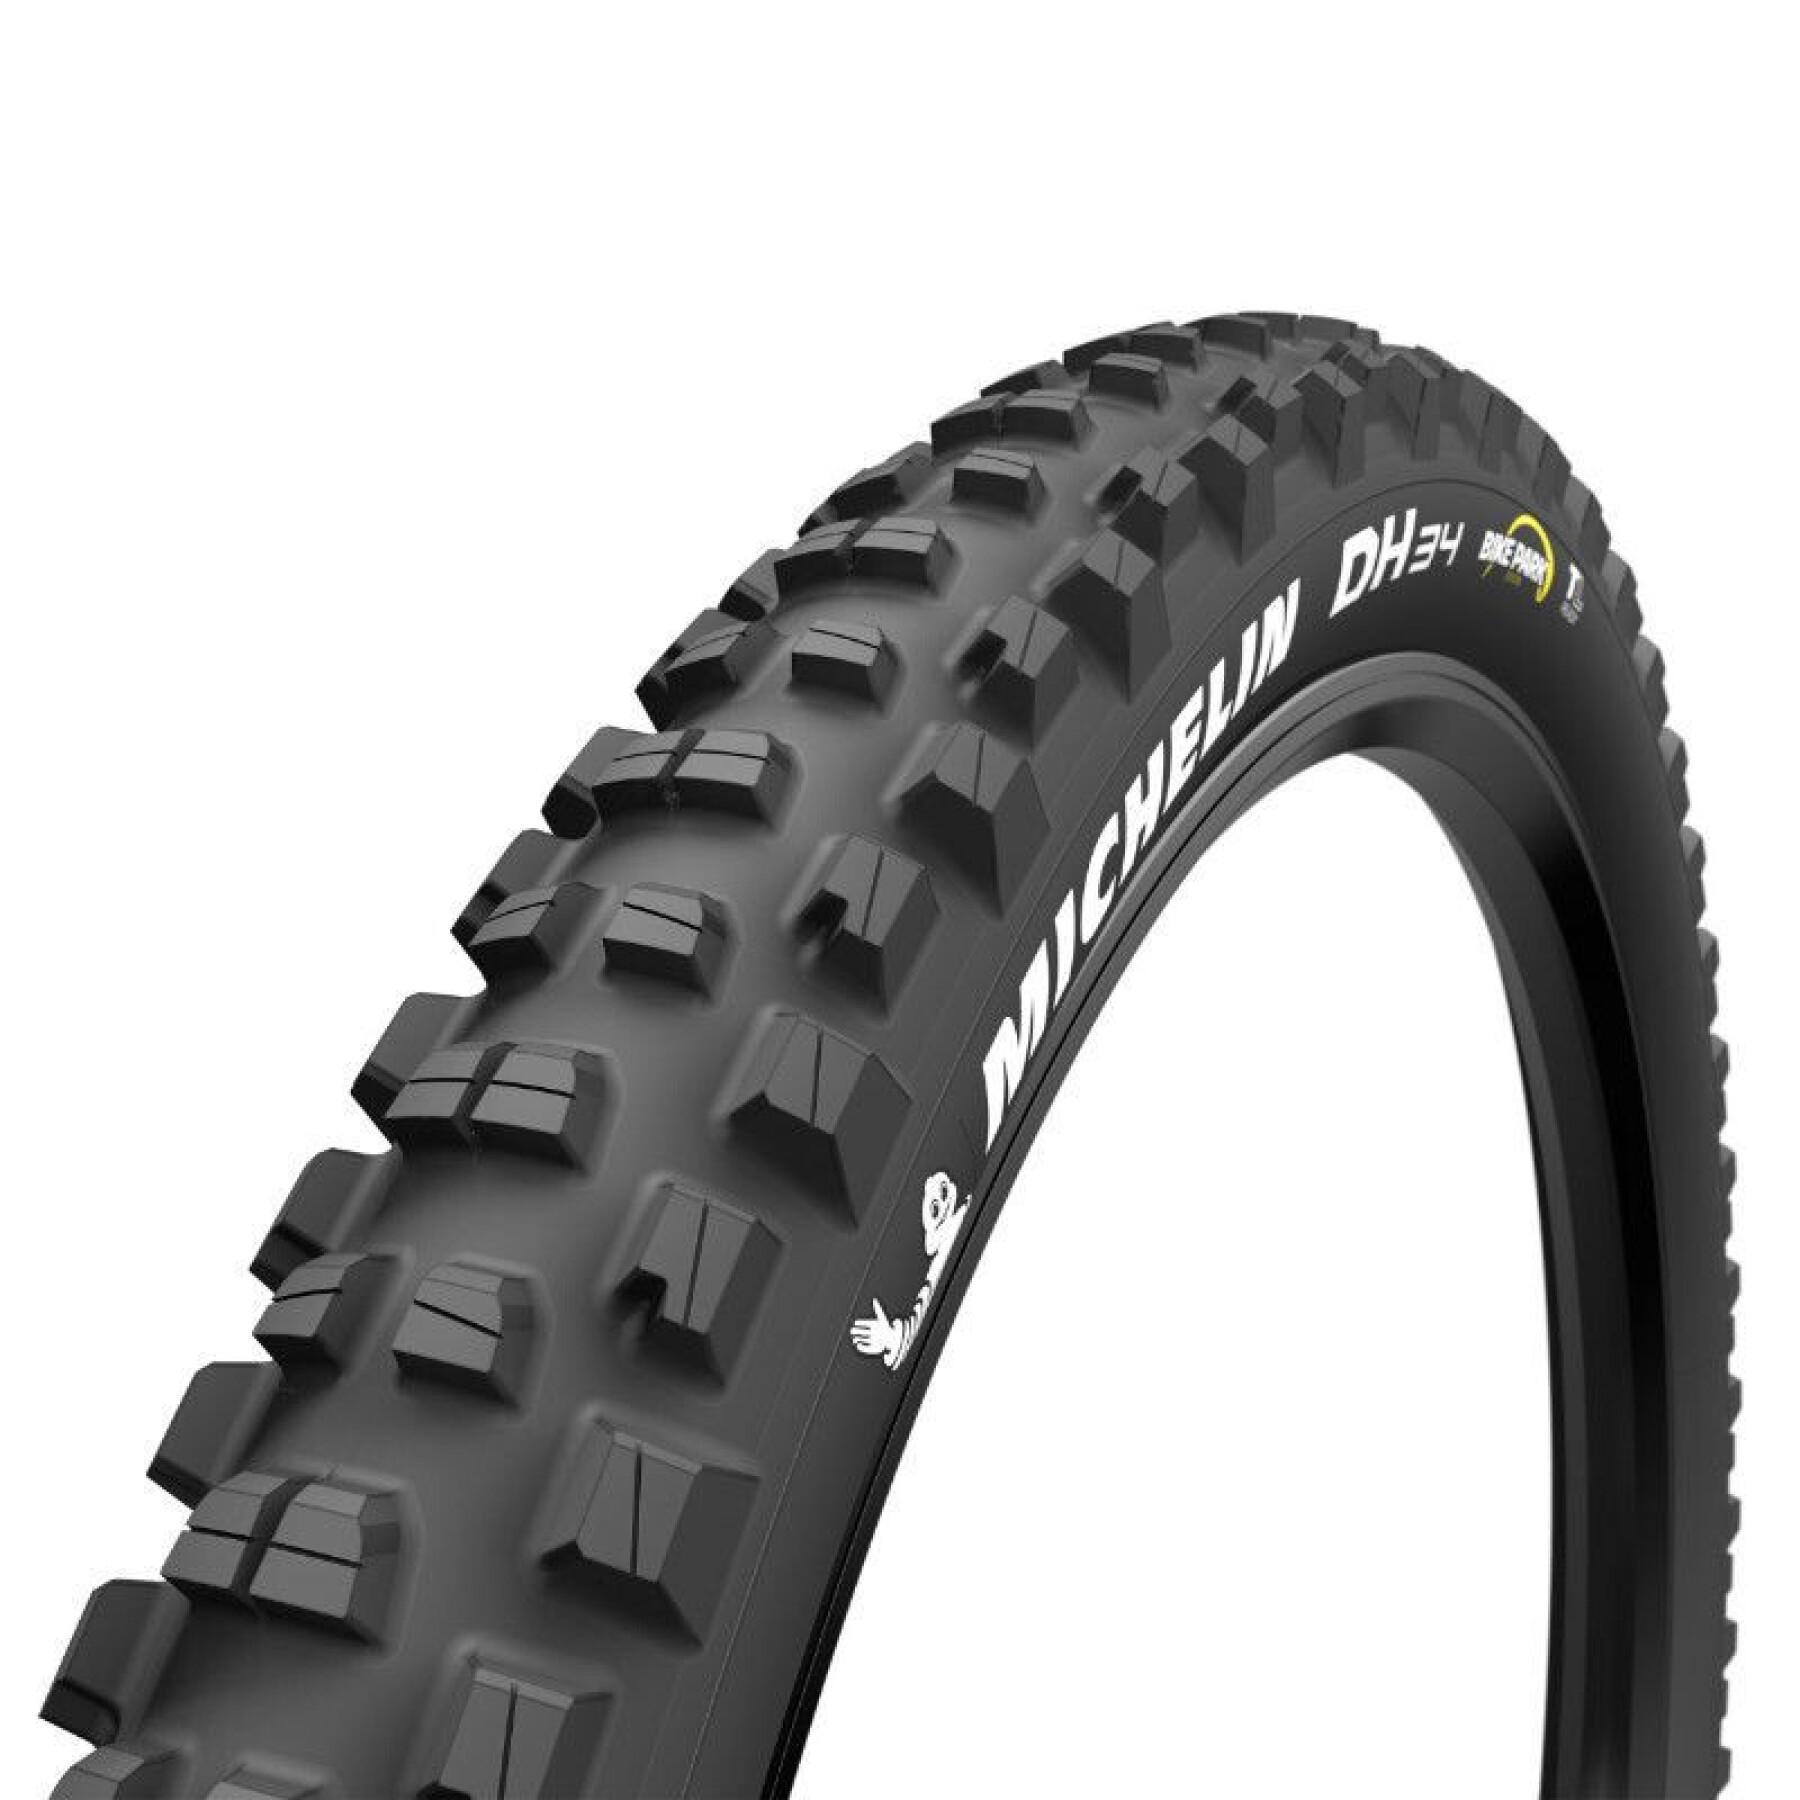 Neumático compatible VAE Michelin Gravity Bike Park Dh34 Tubeless Tubetype Performance Tr (61-584) (650B)